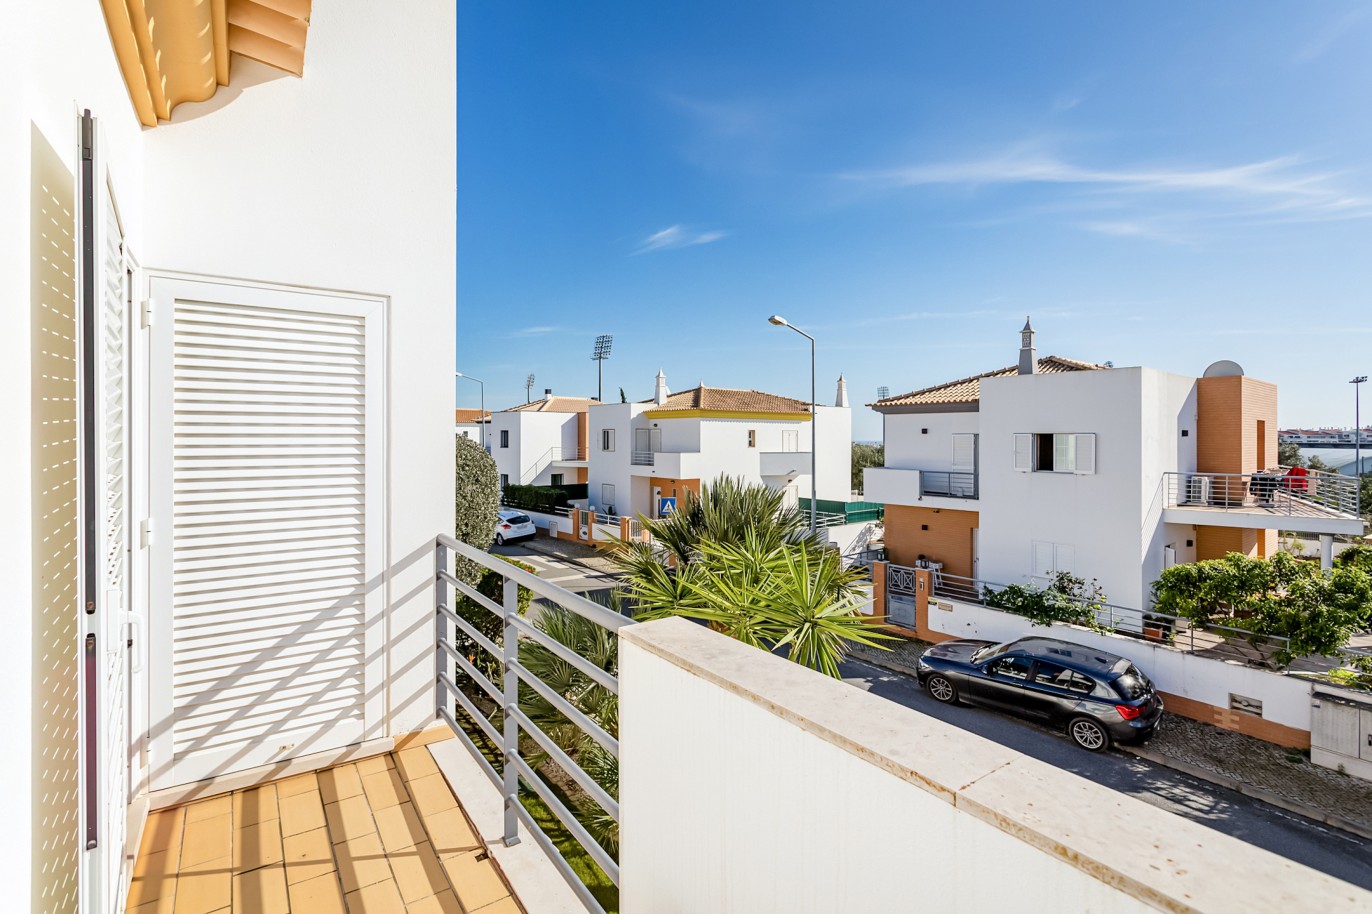 4 bedroom detached villa with pool for sale in Albufeira, Algarve_214367